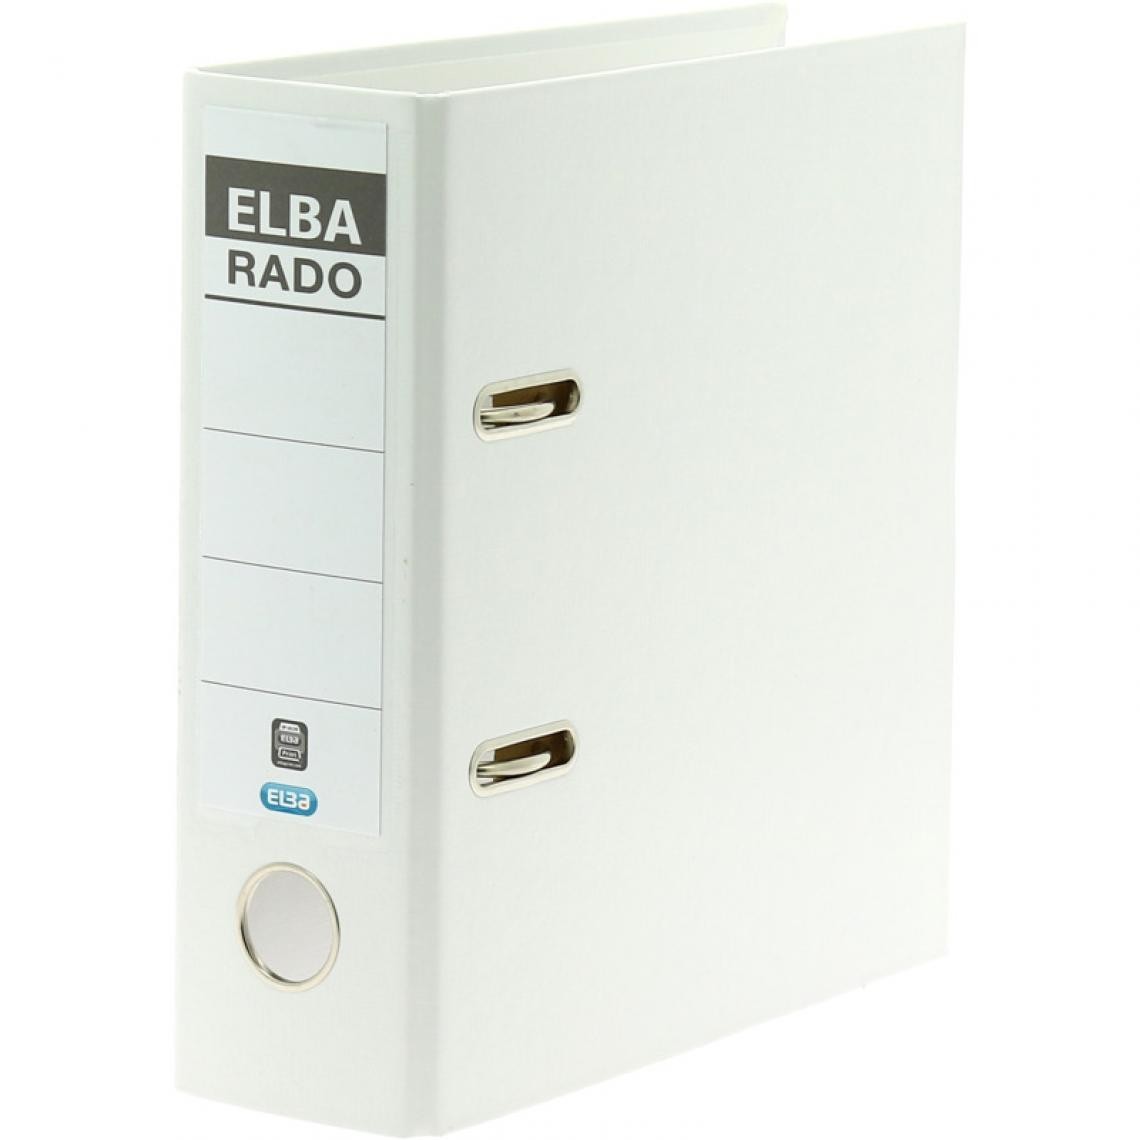 Elba - ELBA classeur rado plast, format A5 haut, dos: 75 mm, blanc () - Accessoires Bureau